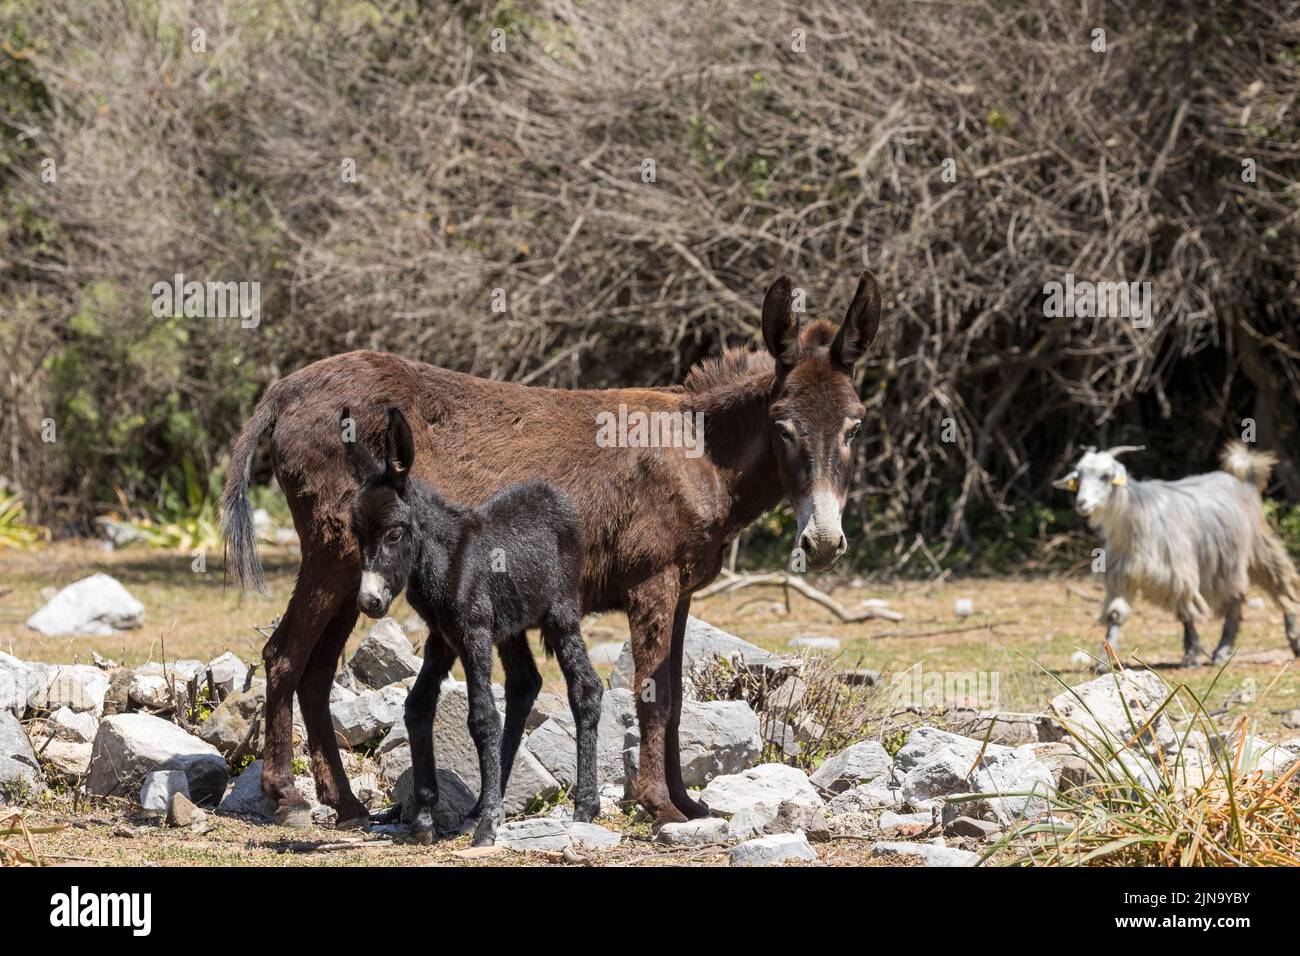 Donkeys mugla kaunos ancient site Turkey Stock Photo